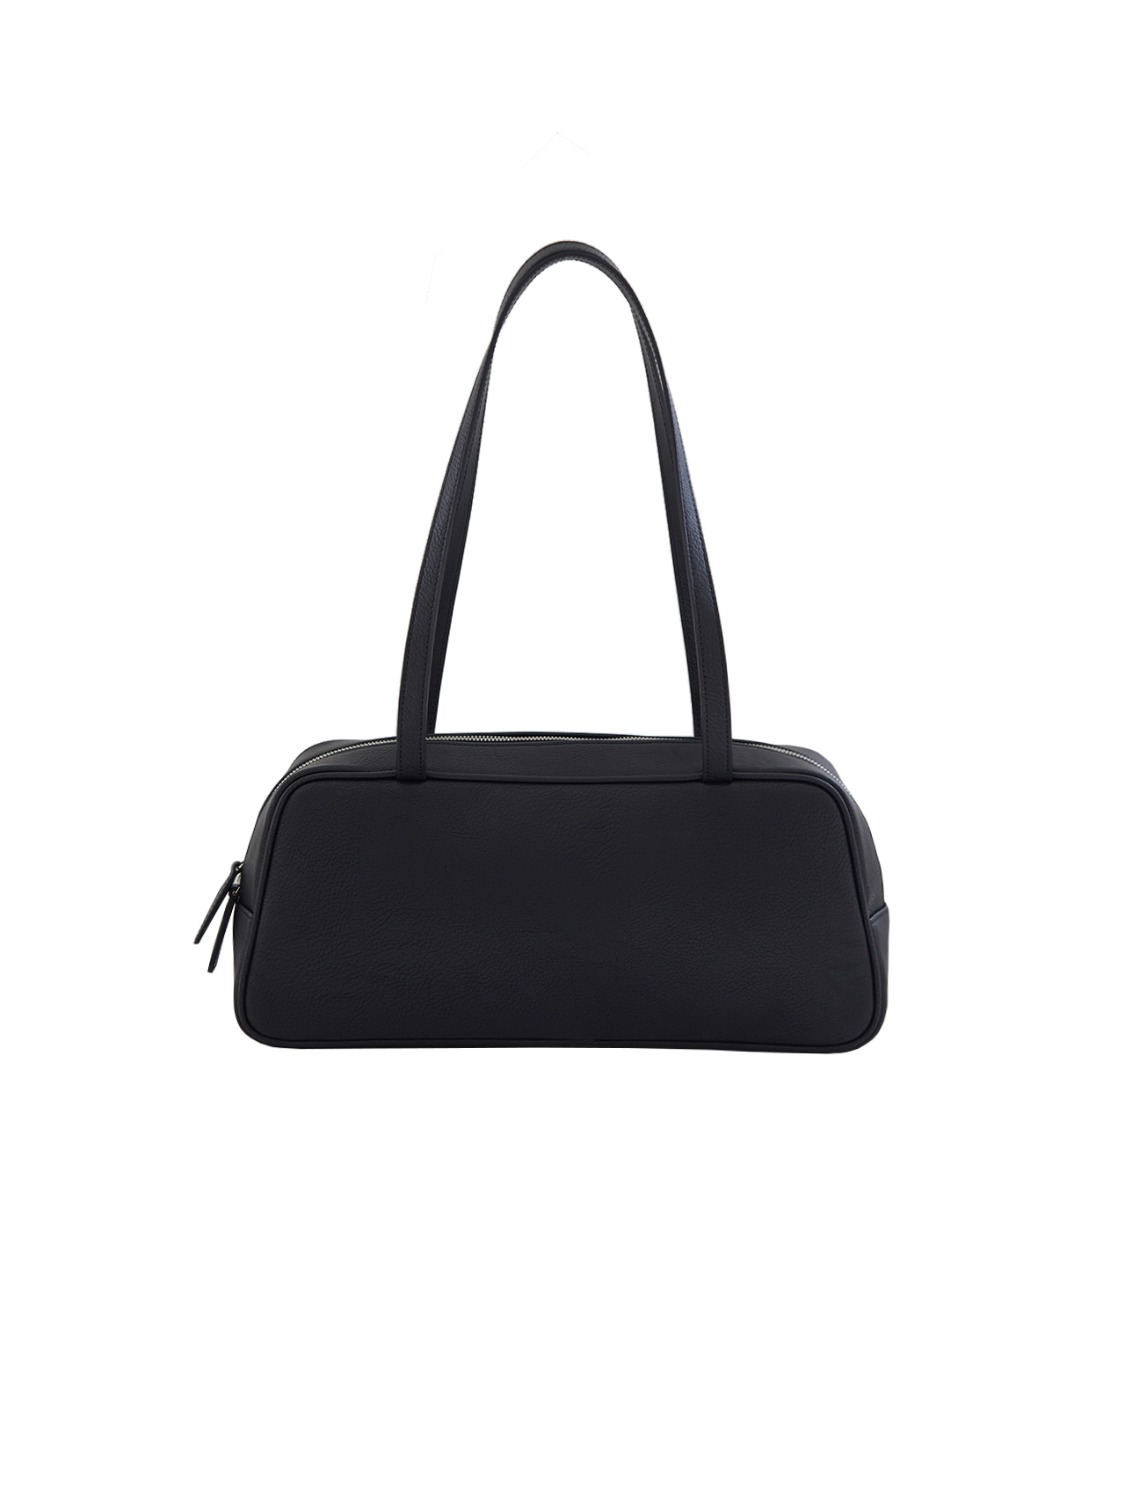 21FW frame bag ECO-Leather black 34